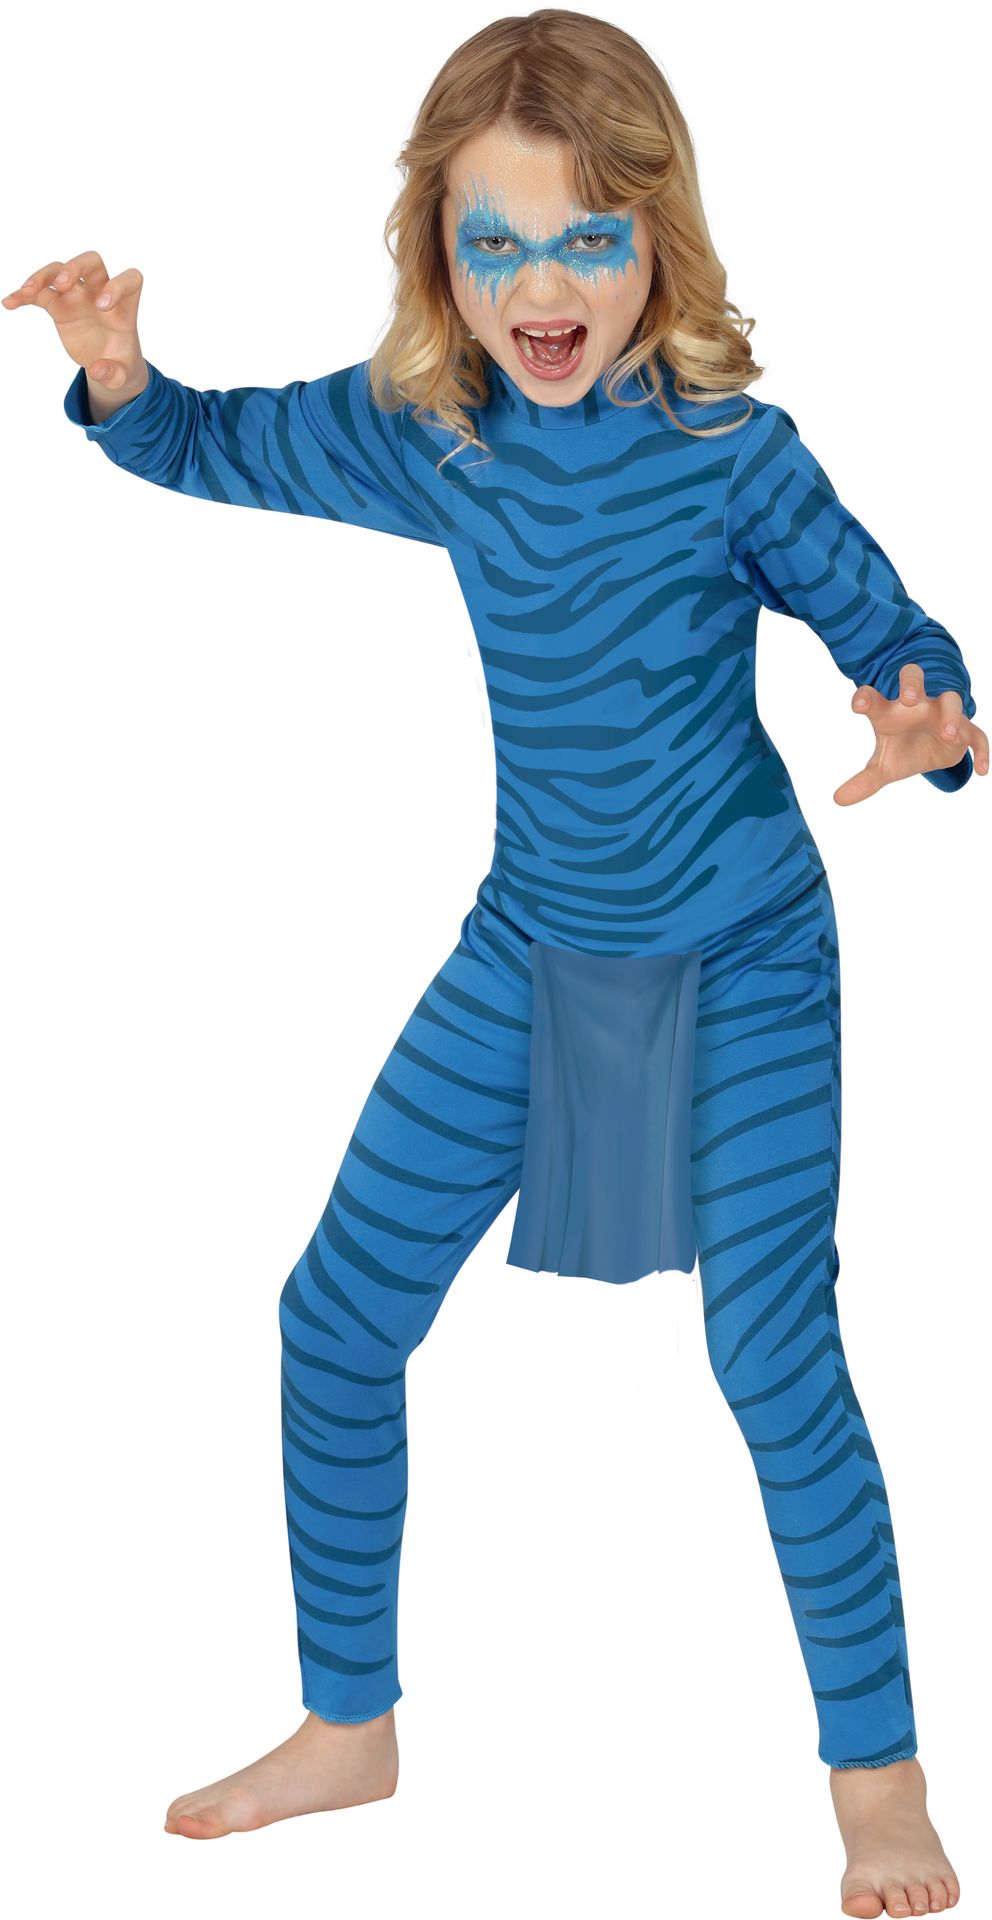 Avatar kostuum kind blauw